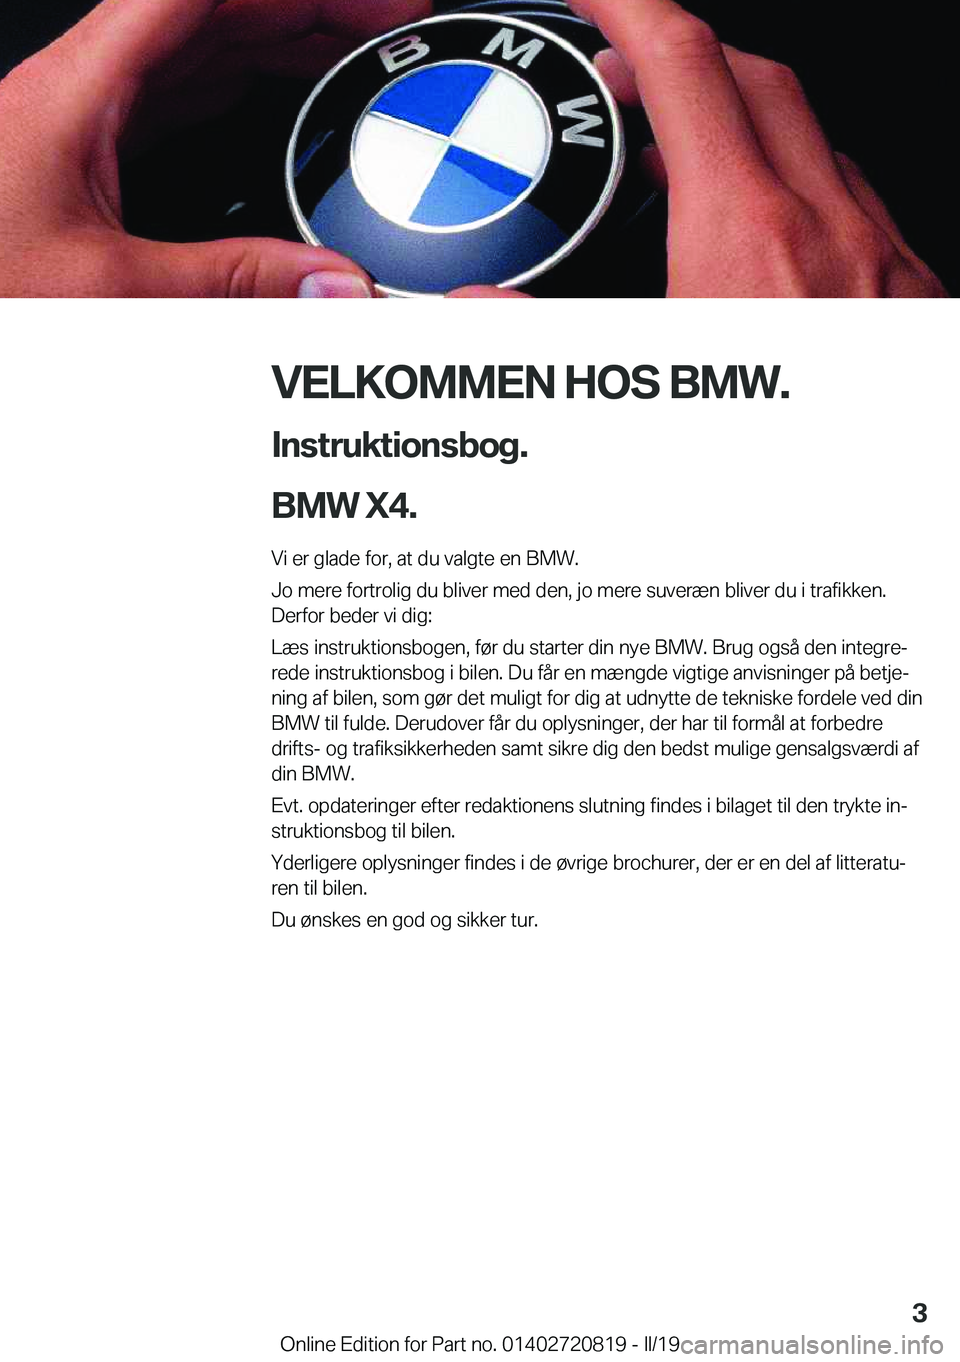 BMW X4 2019  InstruktionsbØger (in Danish) �V�E�L�K�O�M�M�E�N��H�O�S��B�M�W�.
�I�n�s�t�r�u�k�t�i�o�n�s�b�o�g�.
�B�M�W��X�4�. �V�i��e�r��g�l�a�d�e��f�o�r�,��a�t��d�u��v�a�l�g�t�e��e�n��B�M�W�.
�J�o��m�e�r�e��f�o�r�t�r�o�l�i�g��d�u